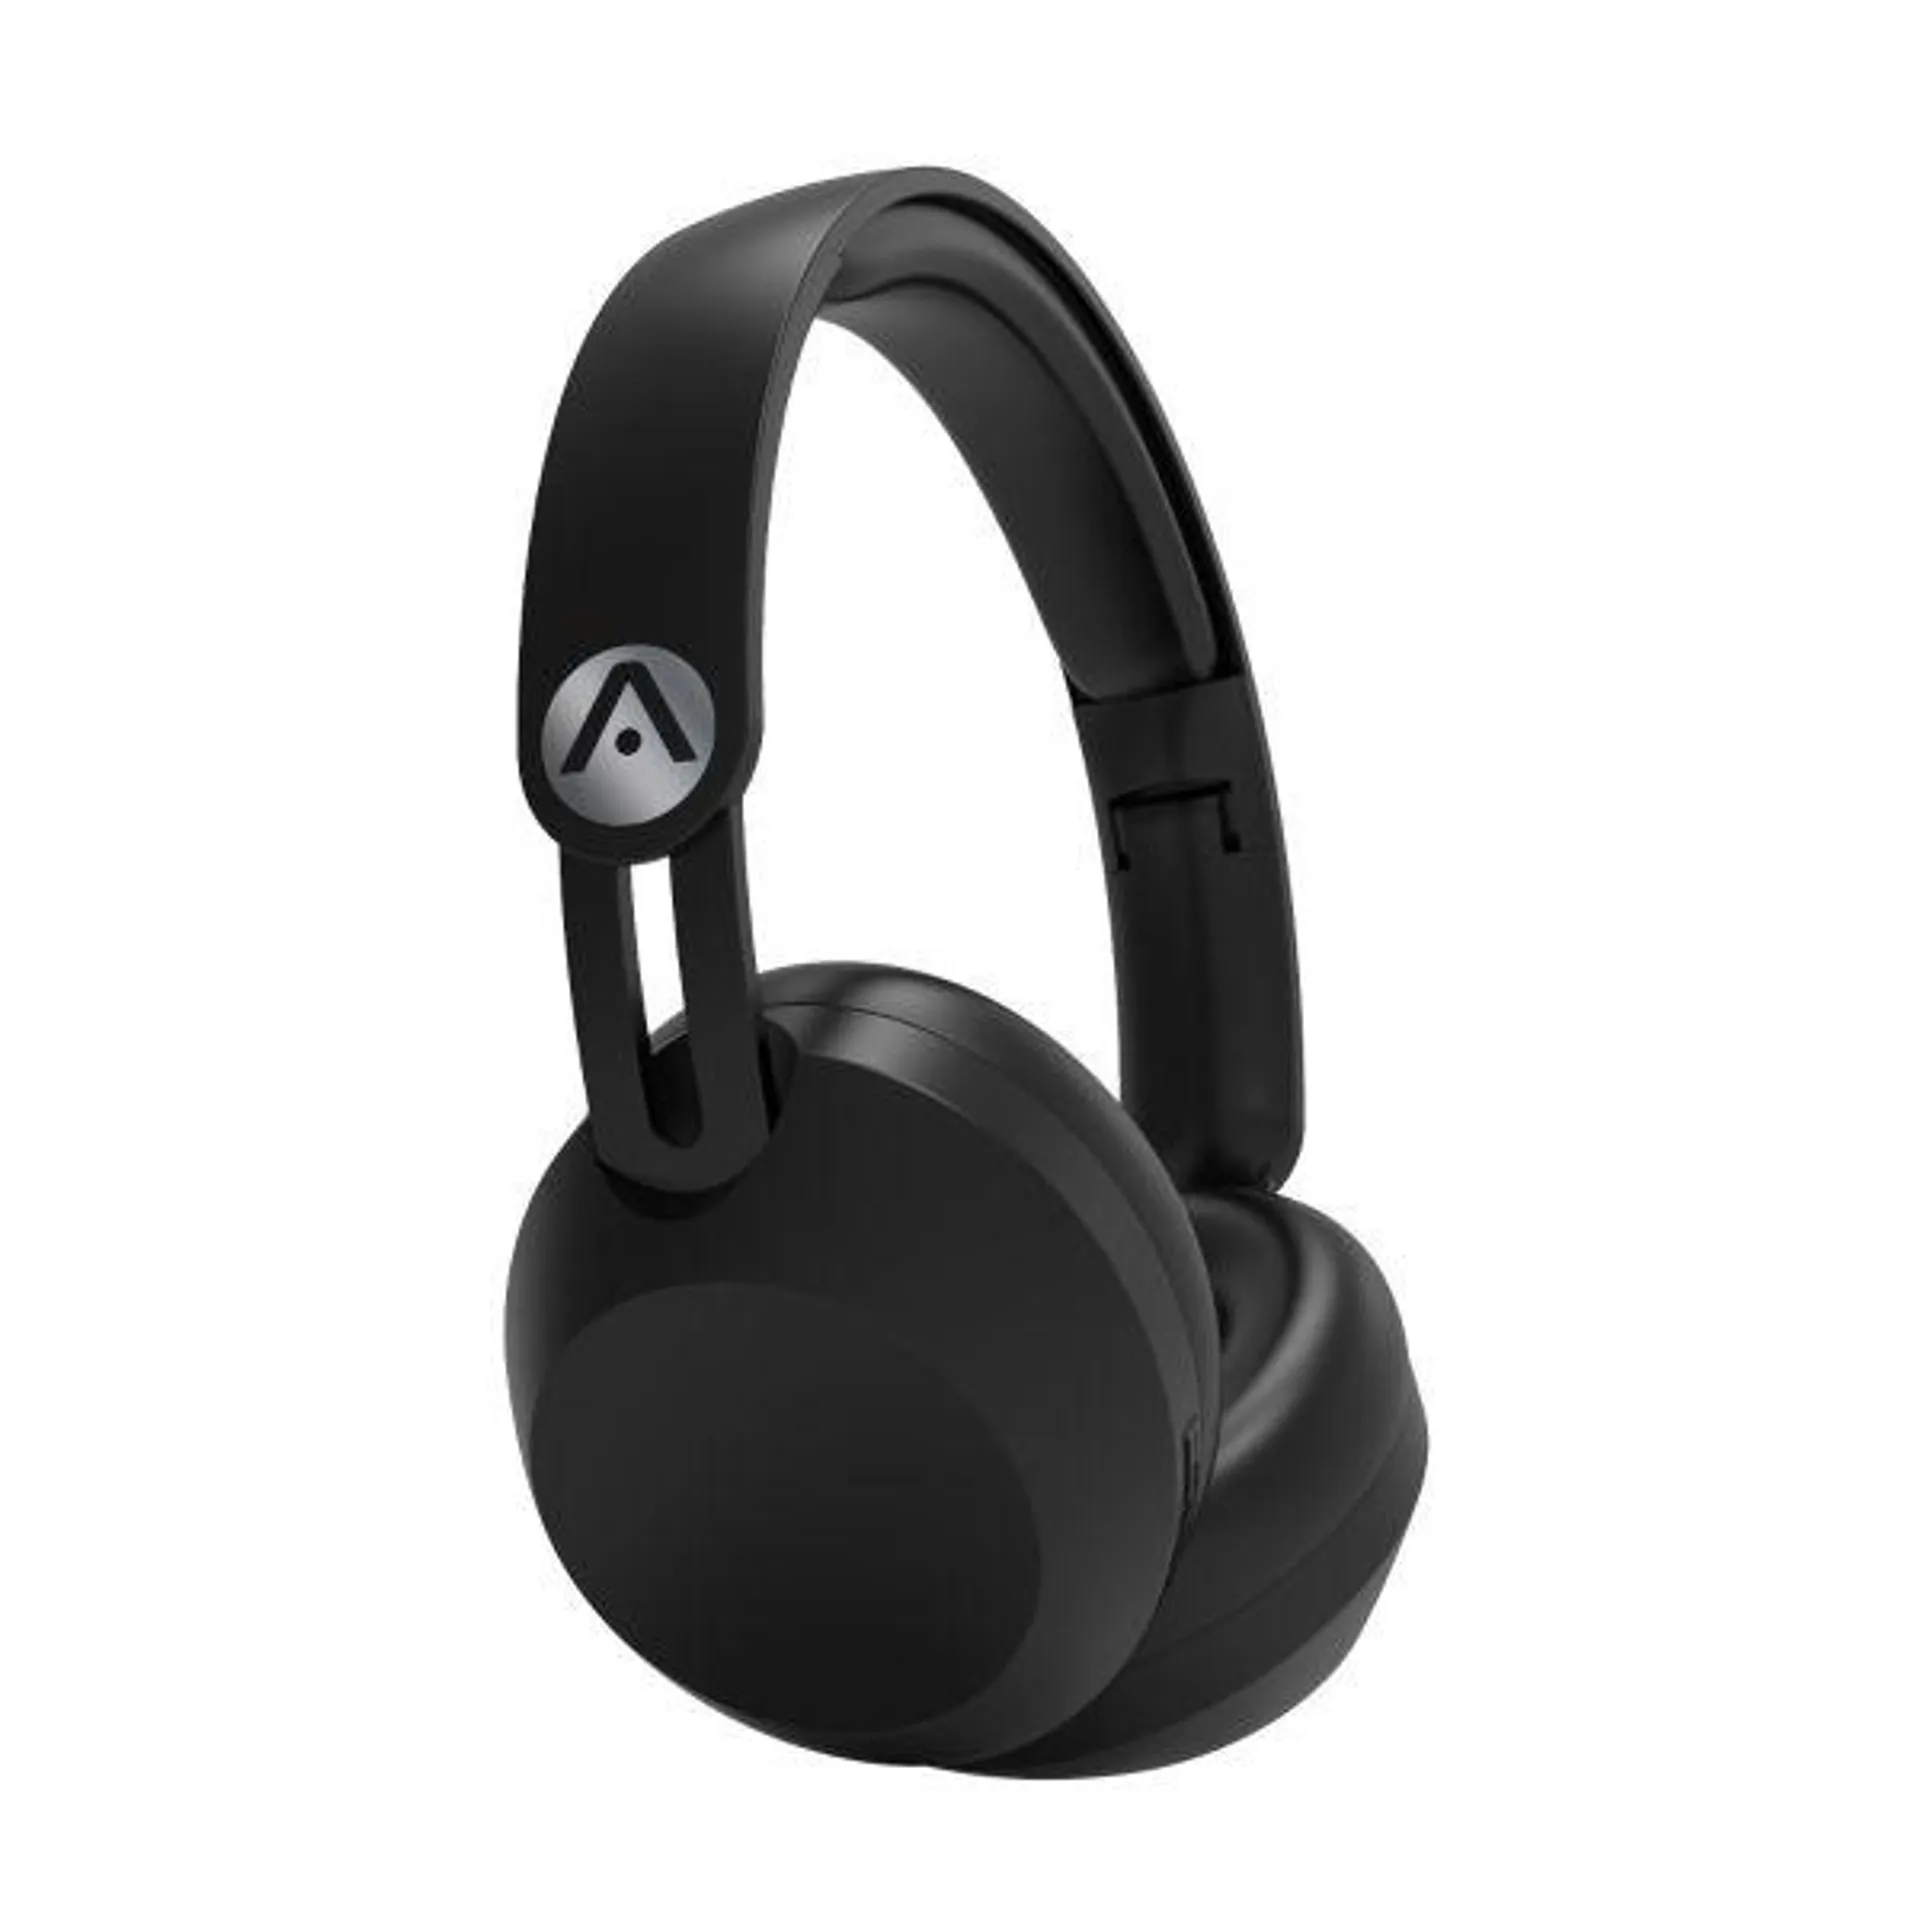 Audiomate Wireless Headphones - Black